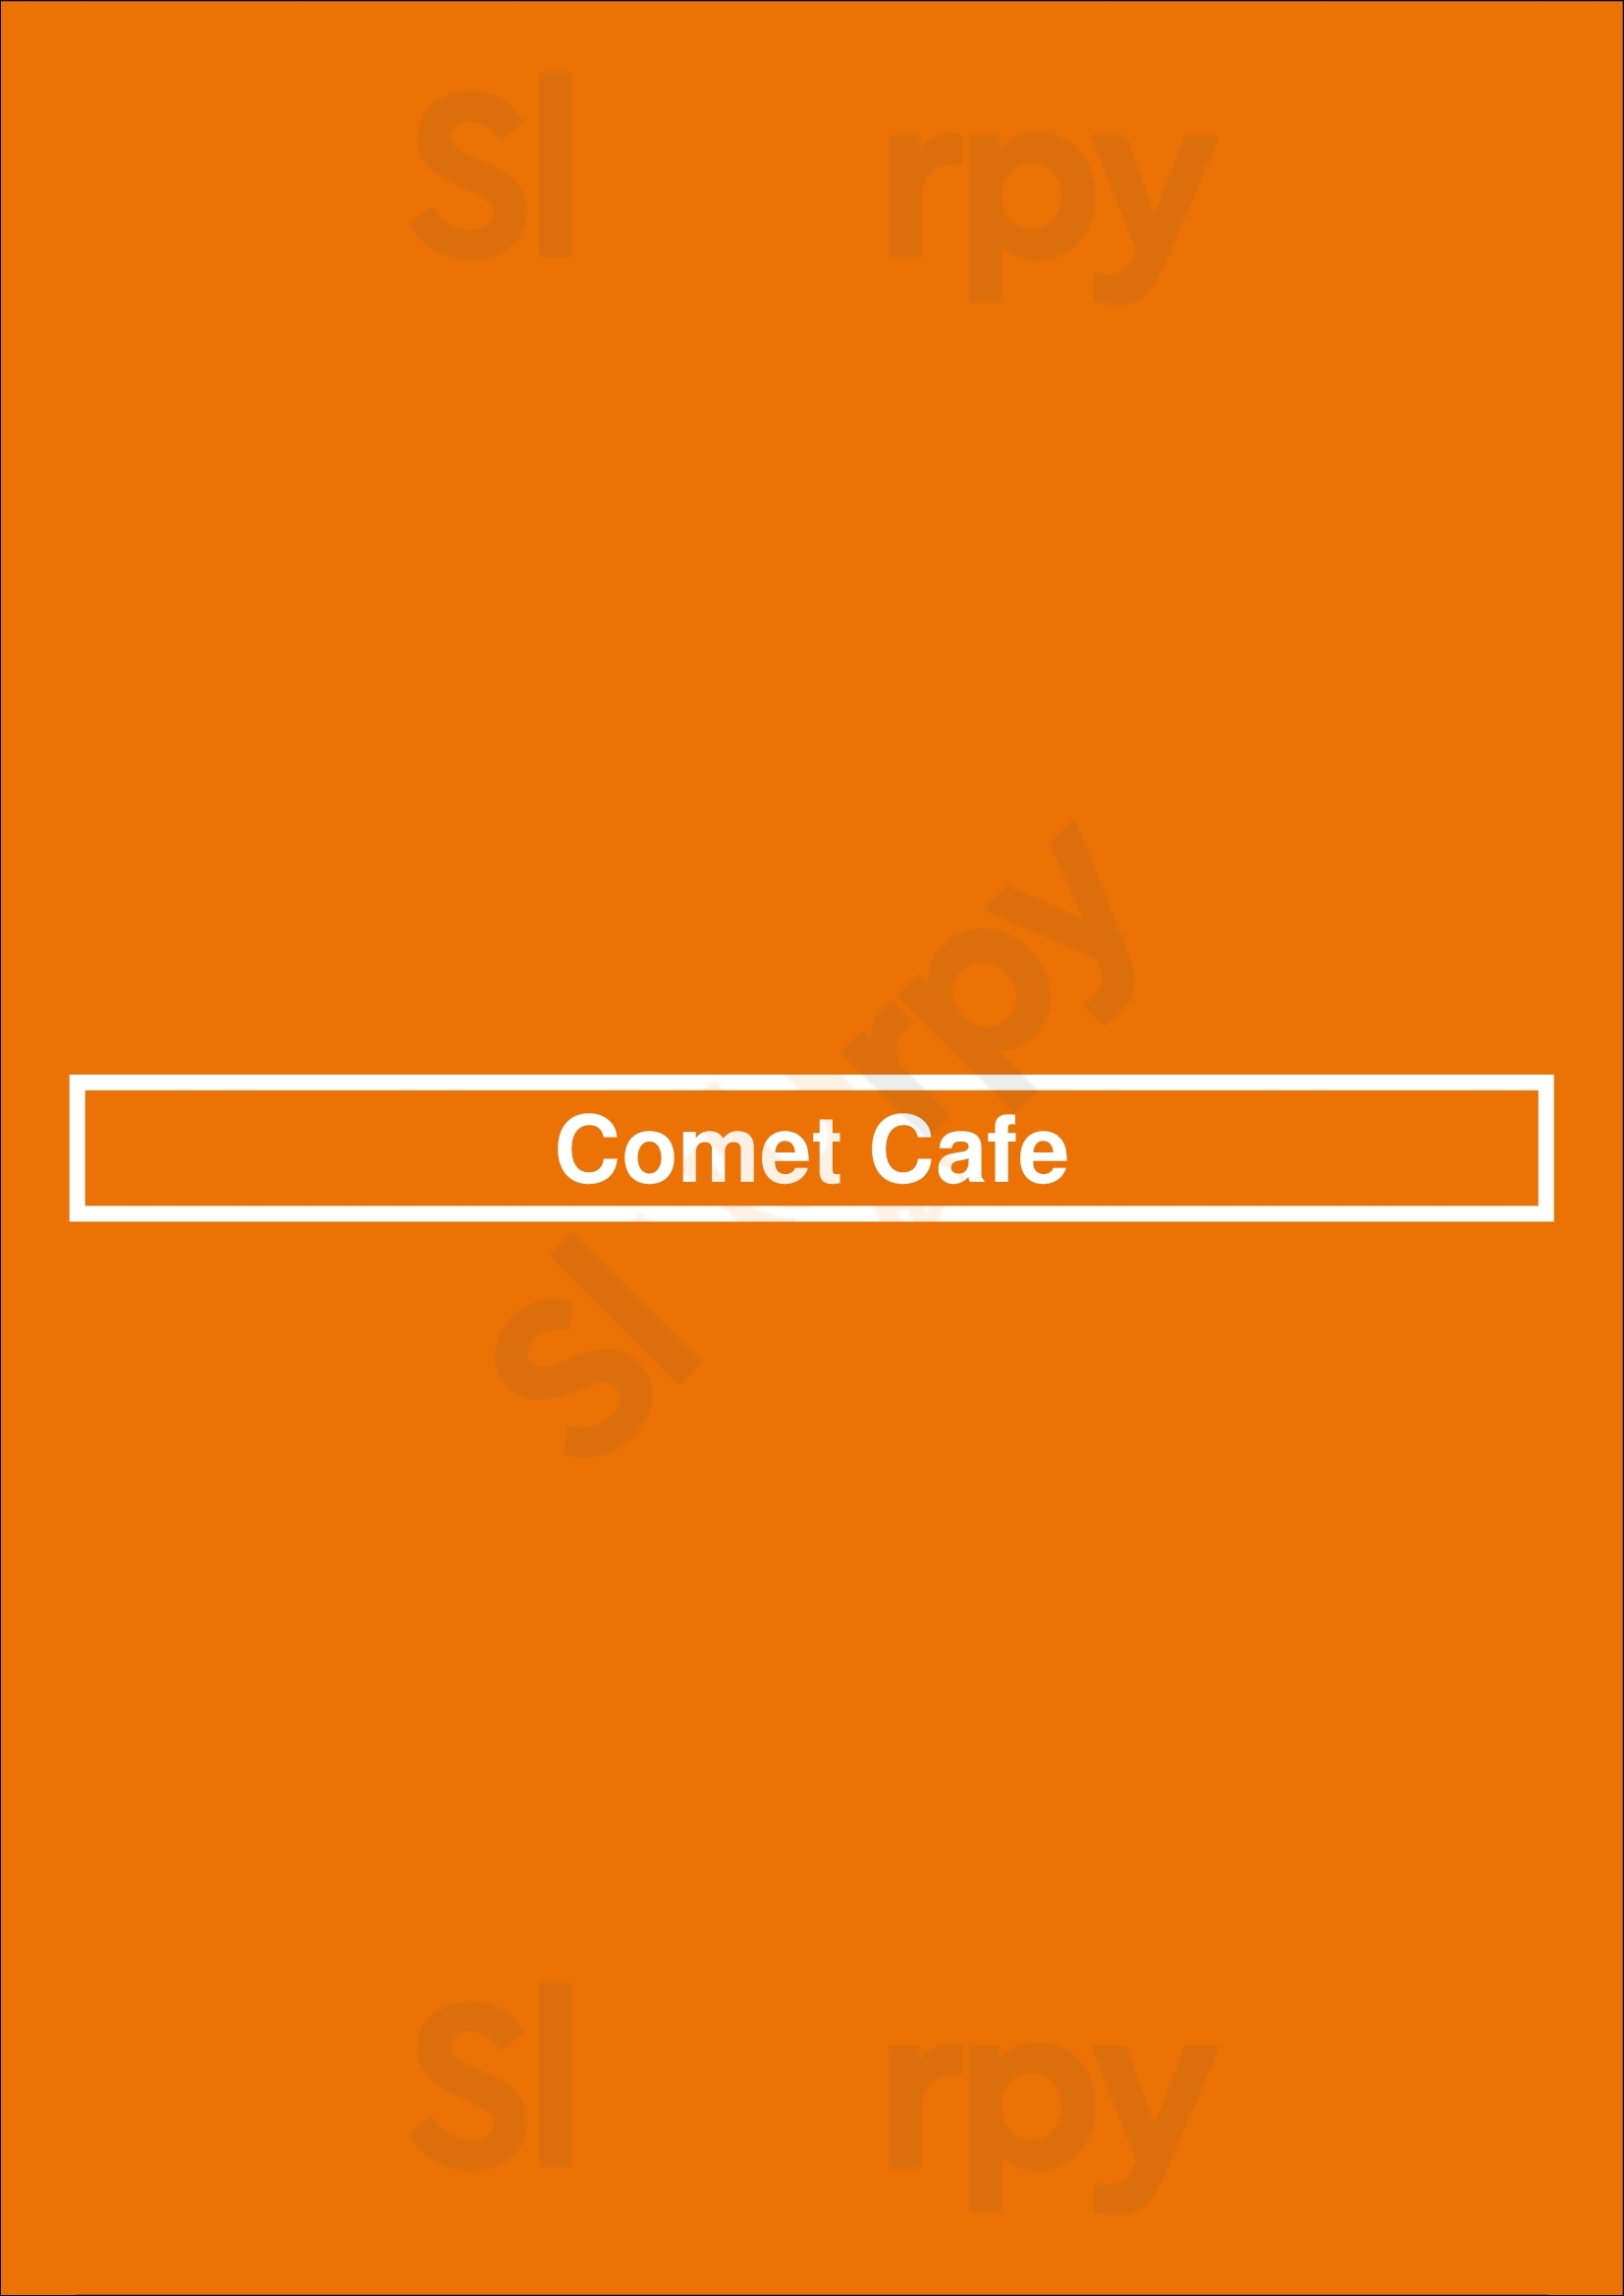 Comet Cafe Milwaukee Menu - 1